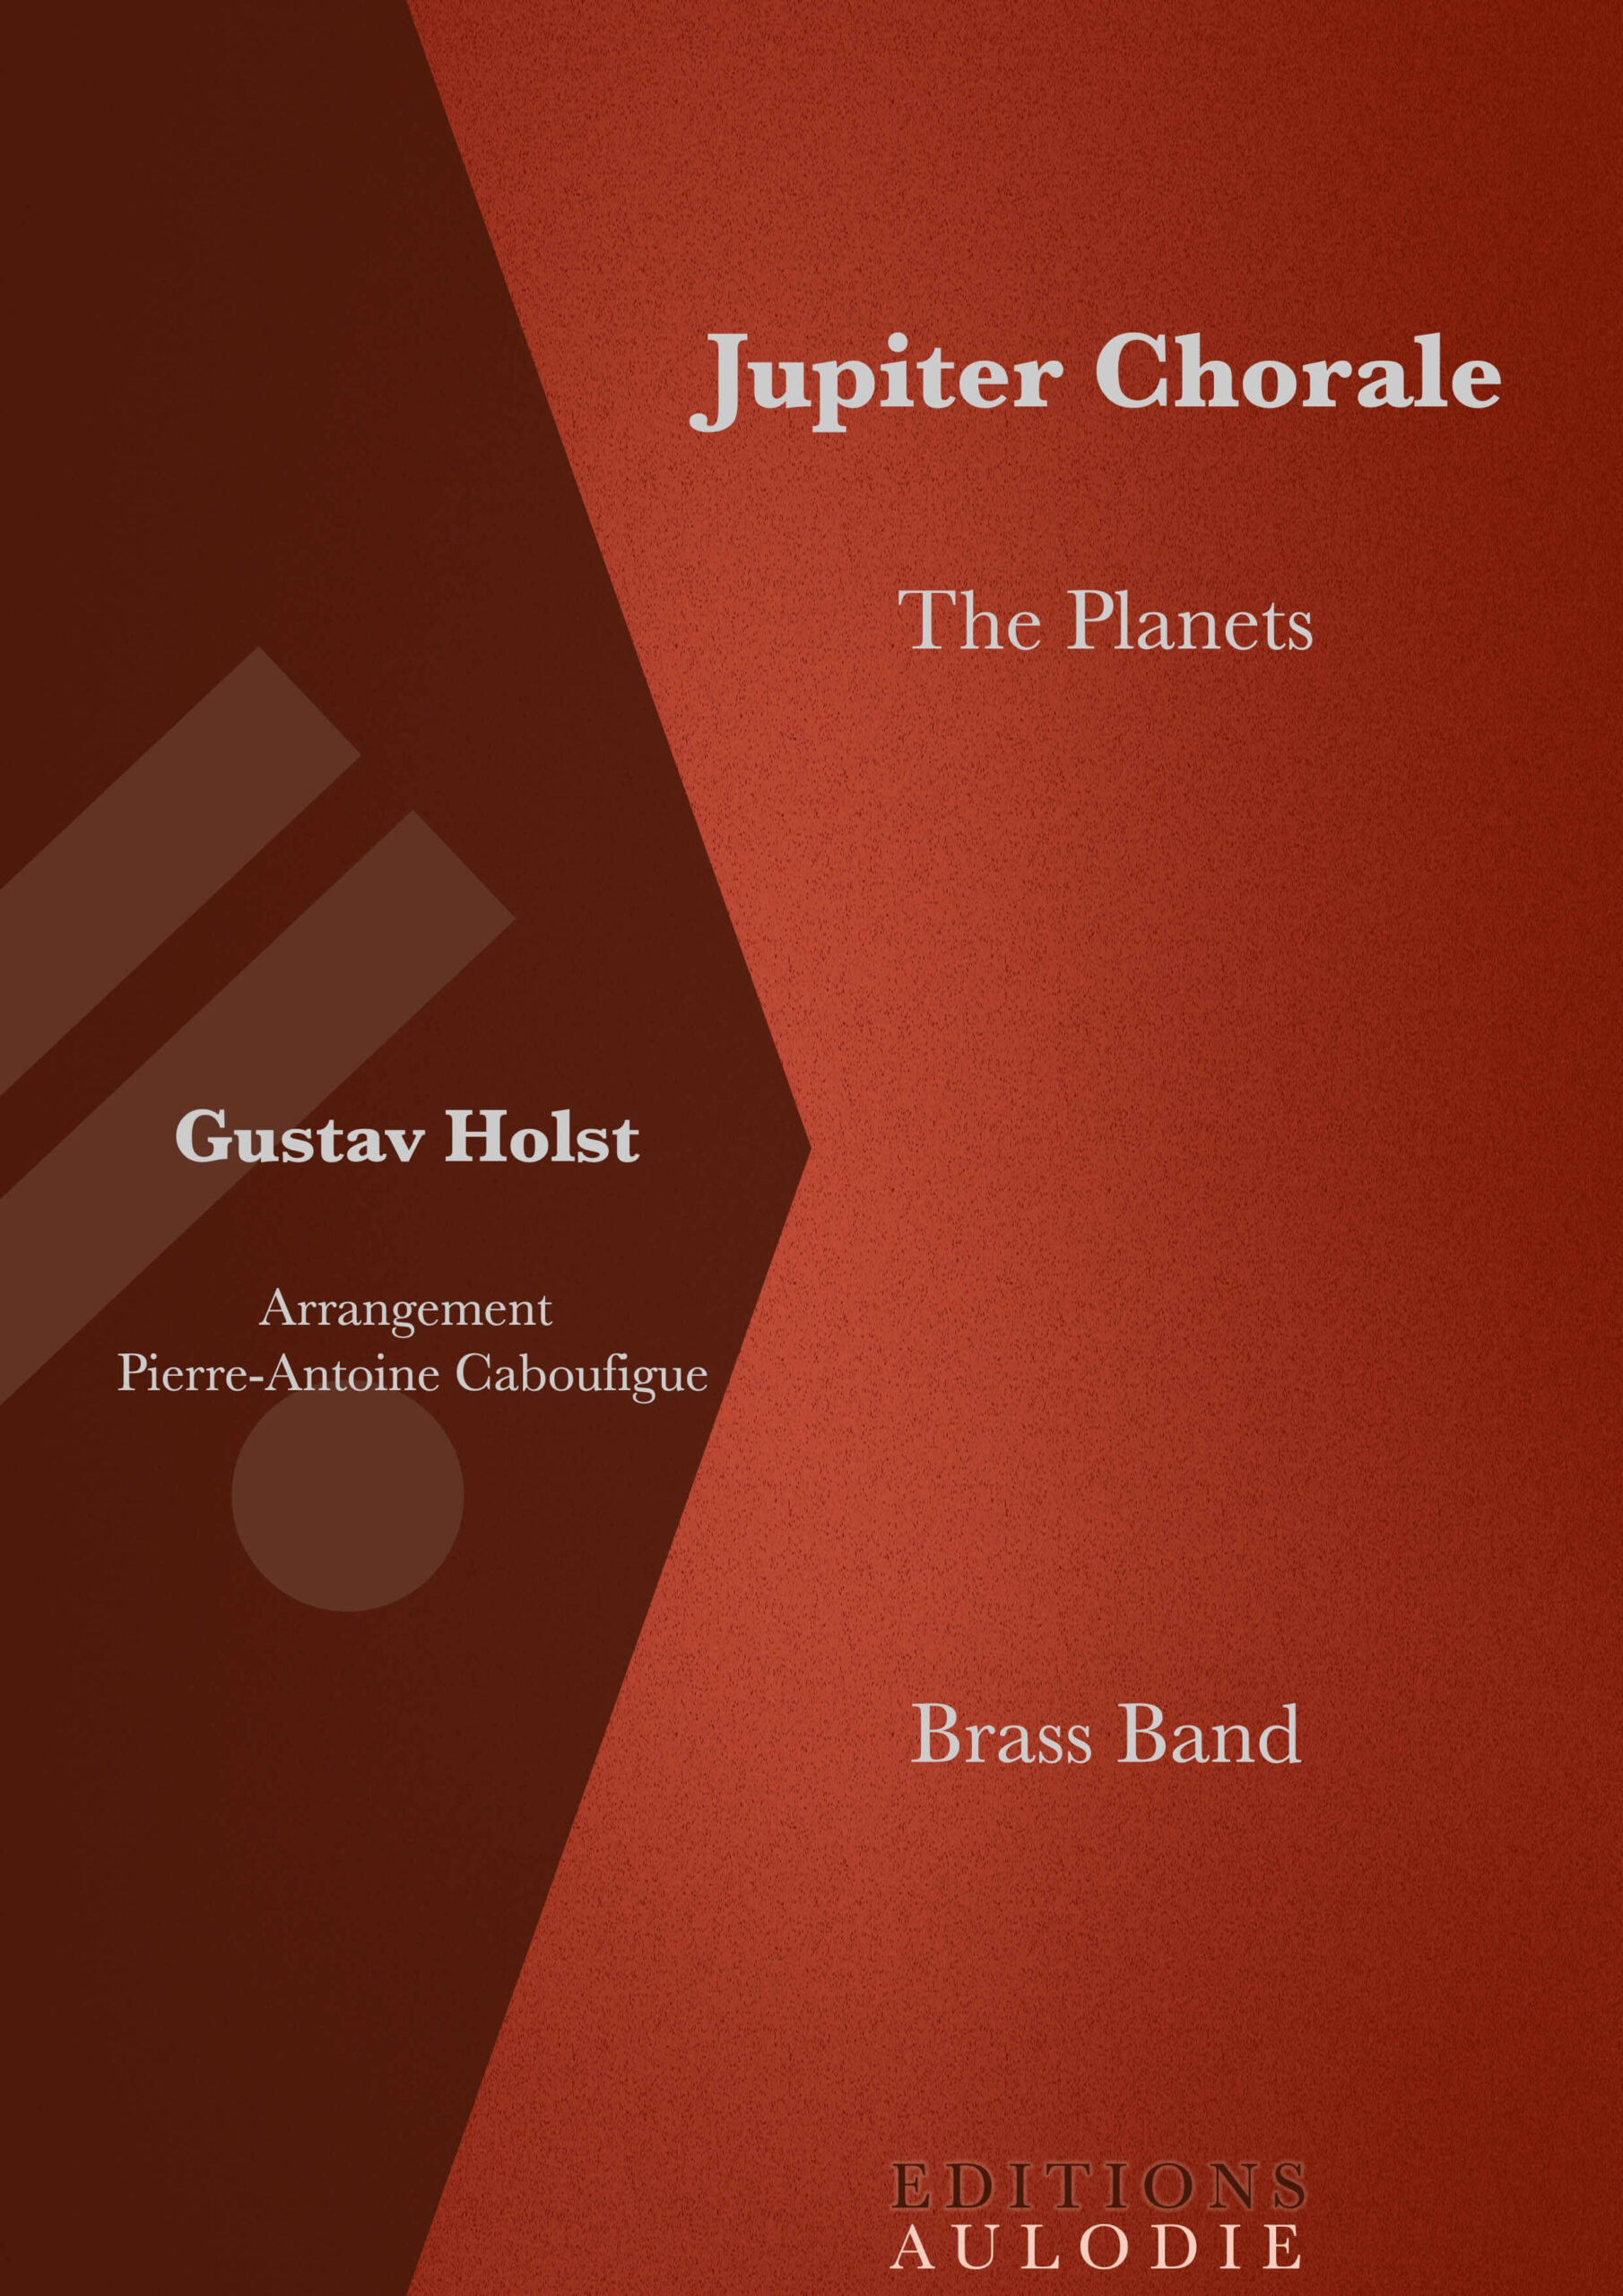 EA01032-Jupiter_Chorale-The_Planets-Gustav_Holst-Brass_Band